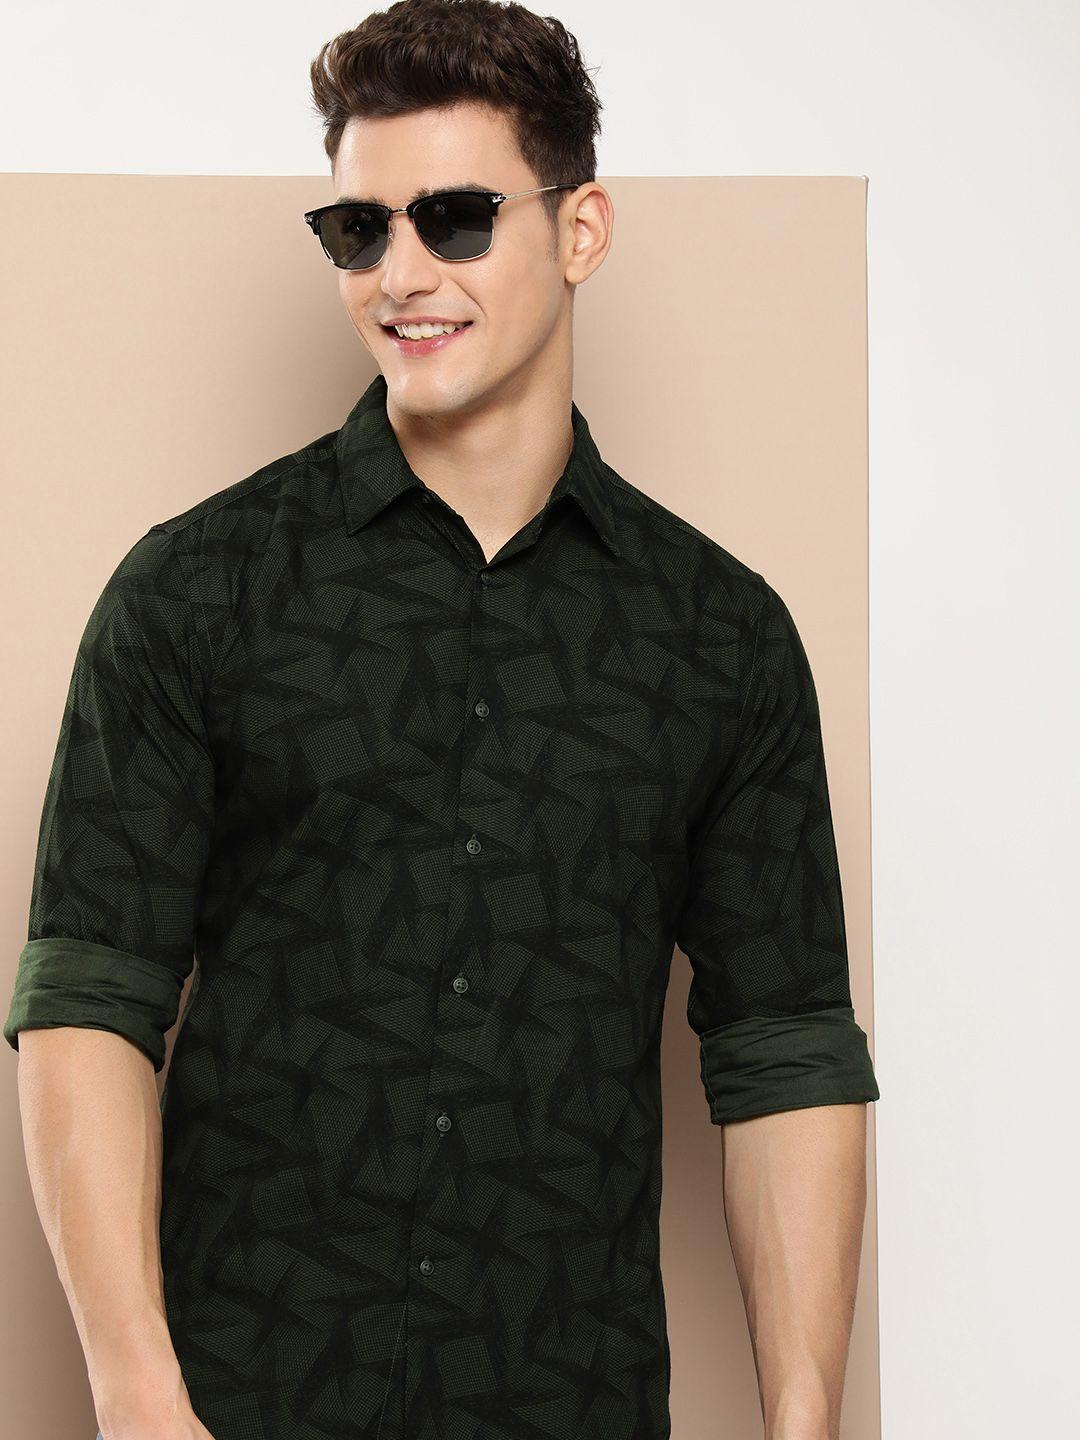 here&now-men-slim-fit-geometric-printed-casual-shirt